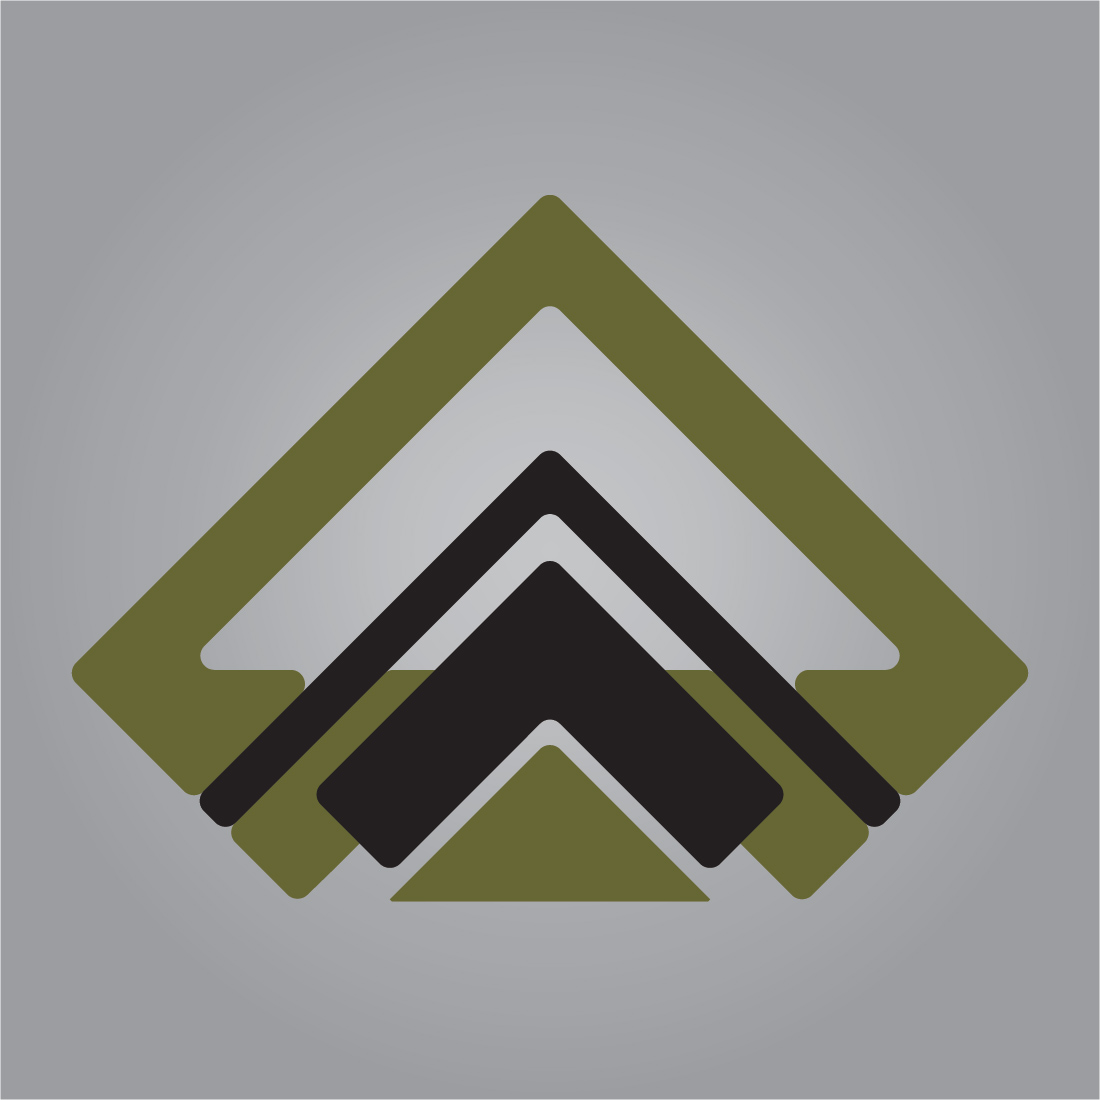 Triangle shape logo design for companies